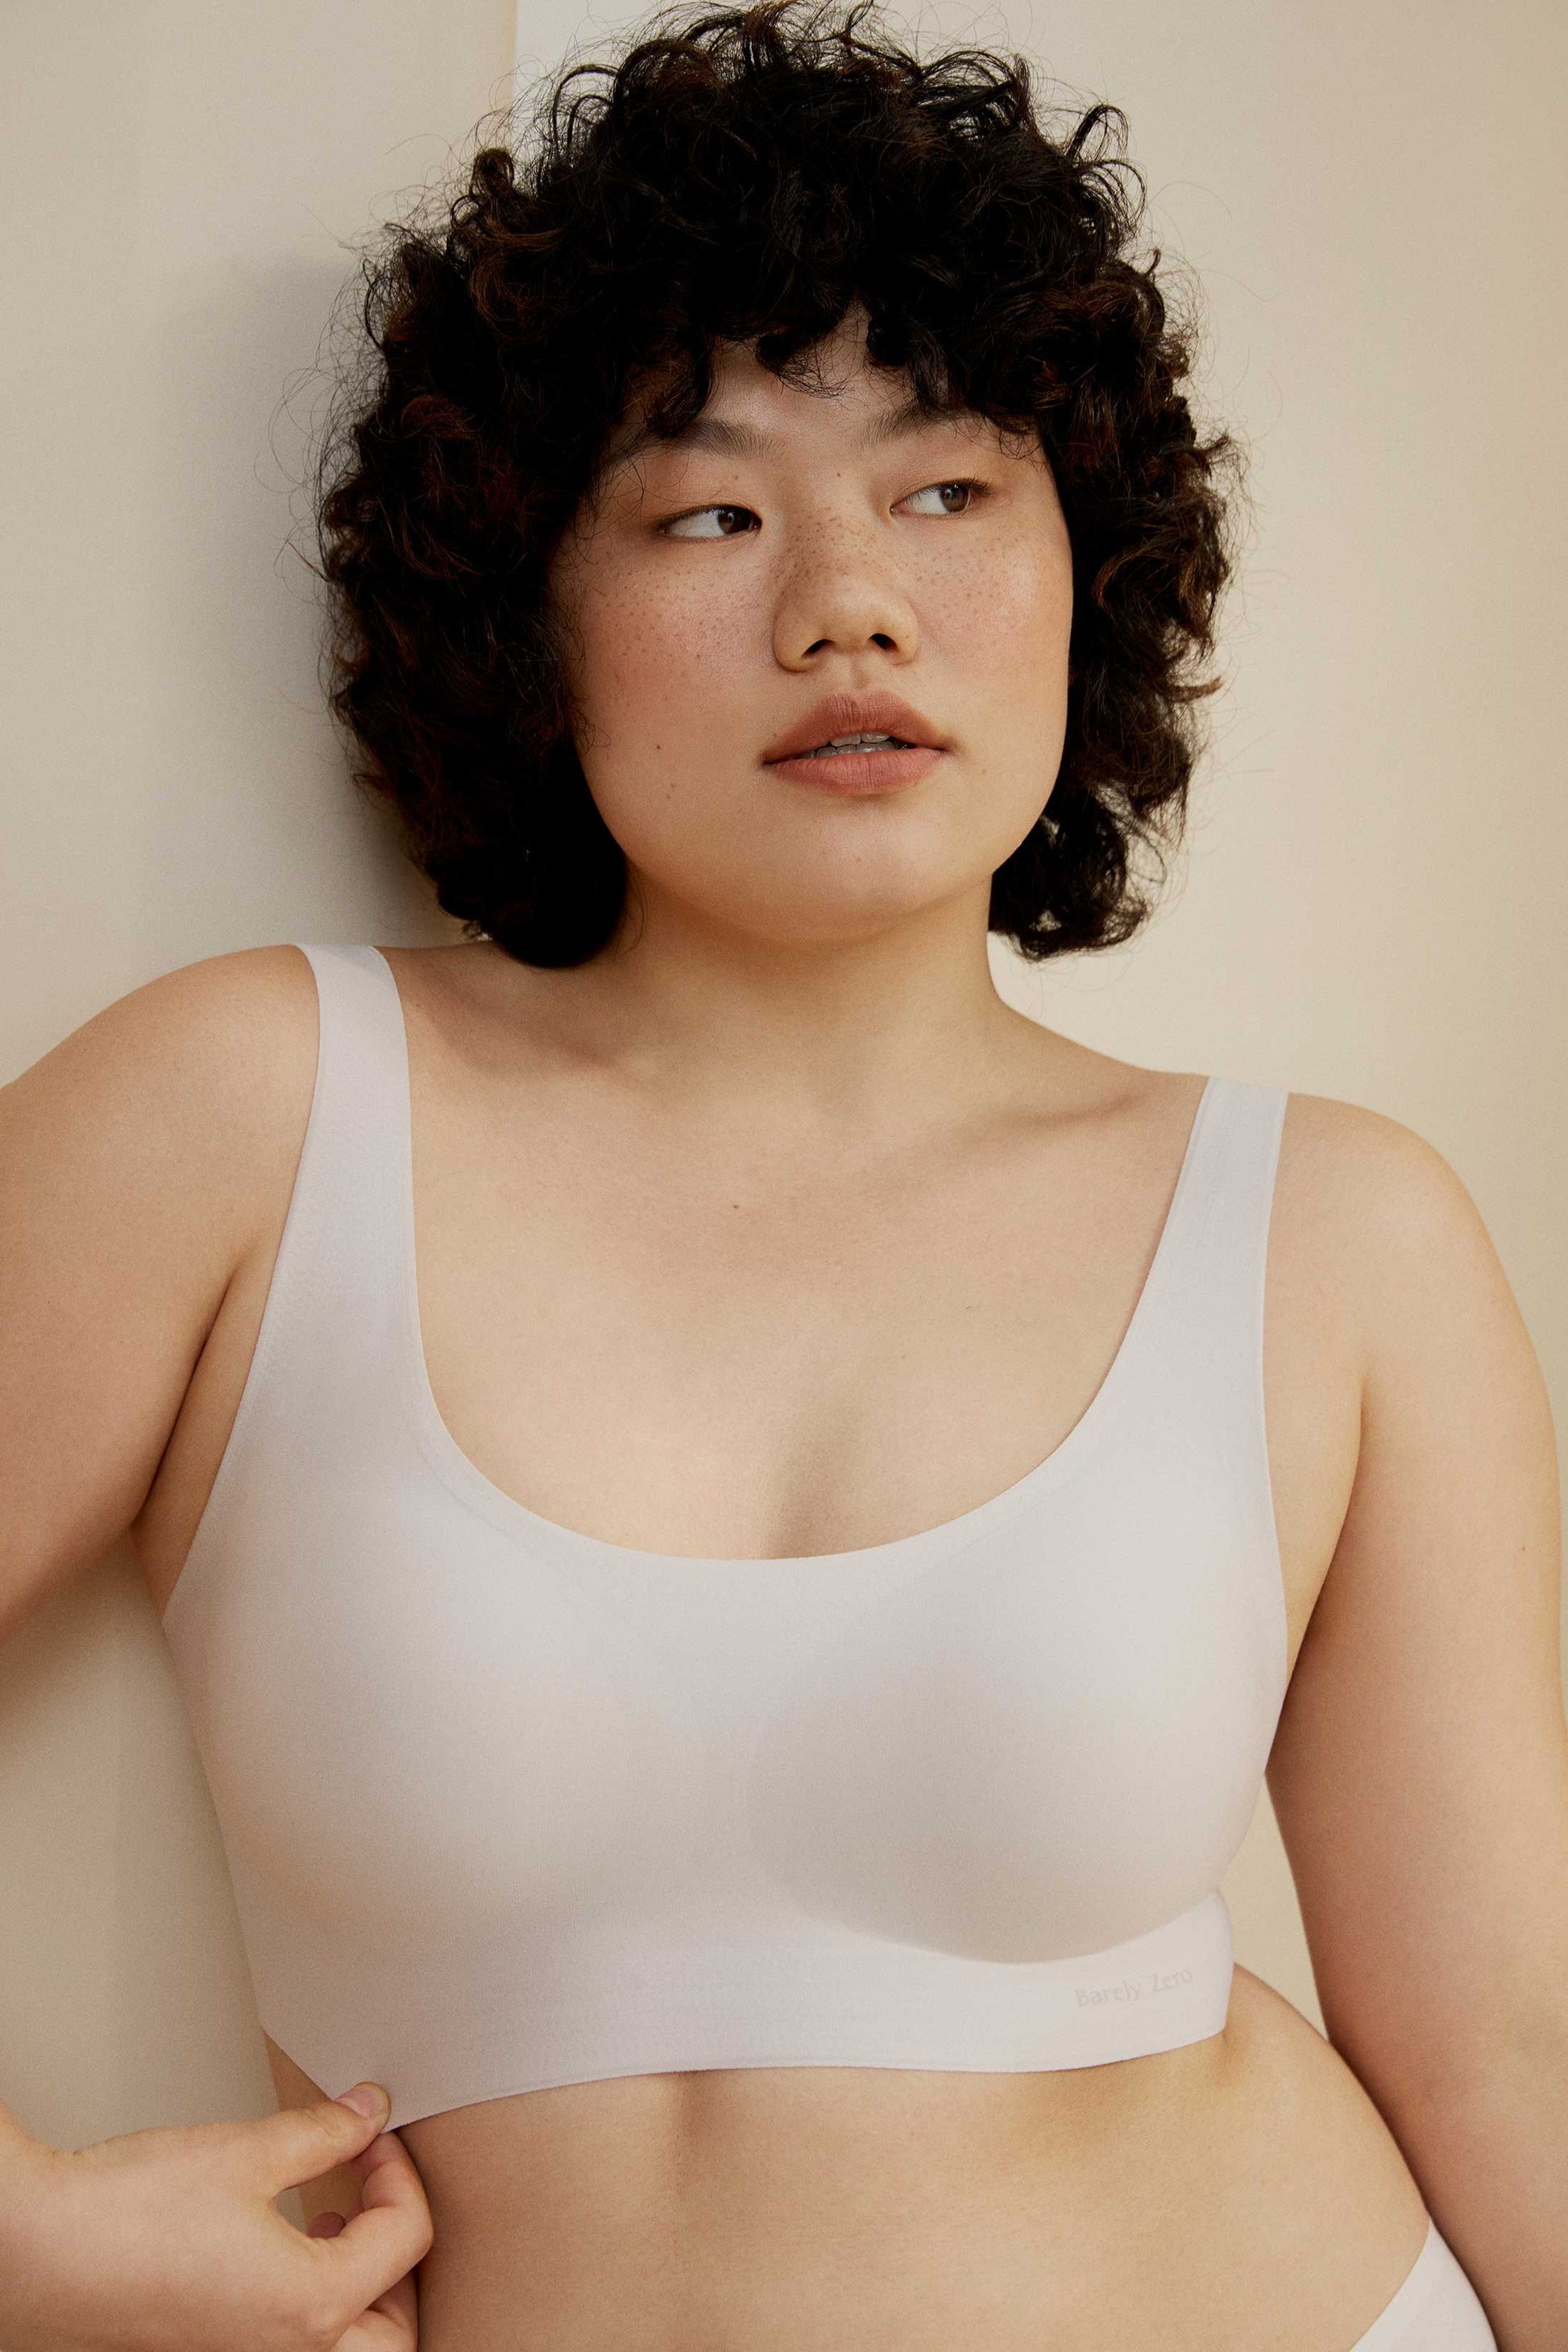 Woman wearing offwhite bra